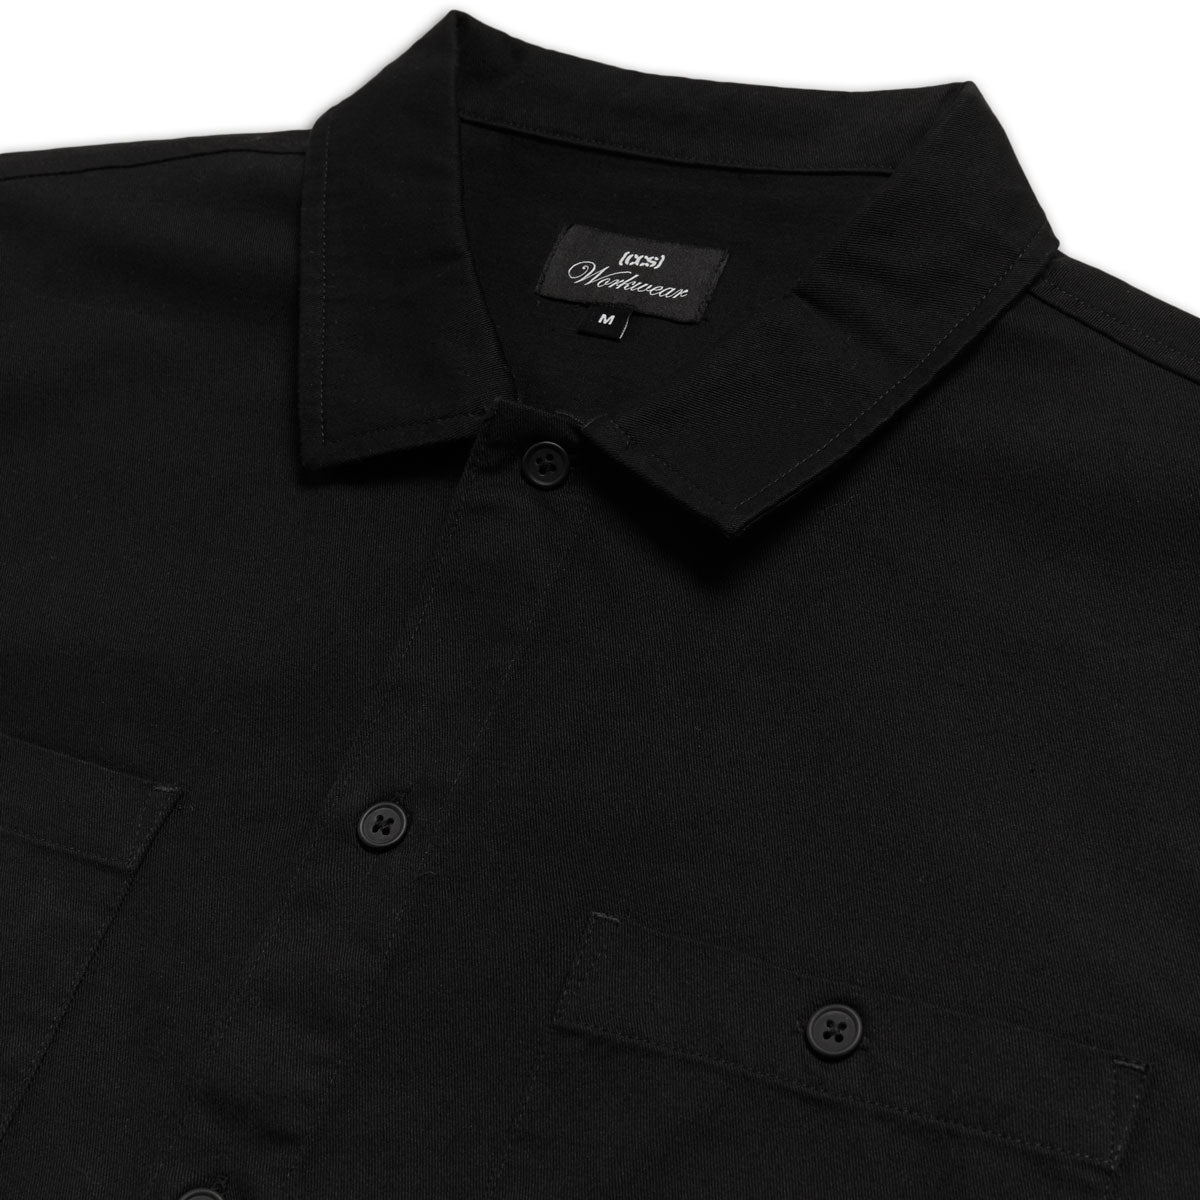 CCS Heavy Cotton Work Shirt - Black image 3